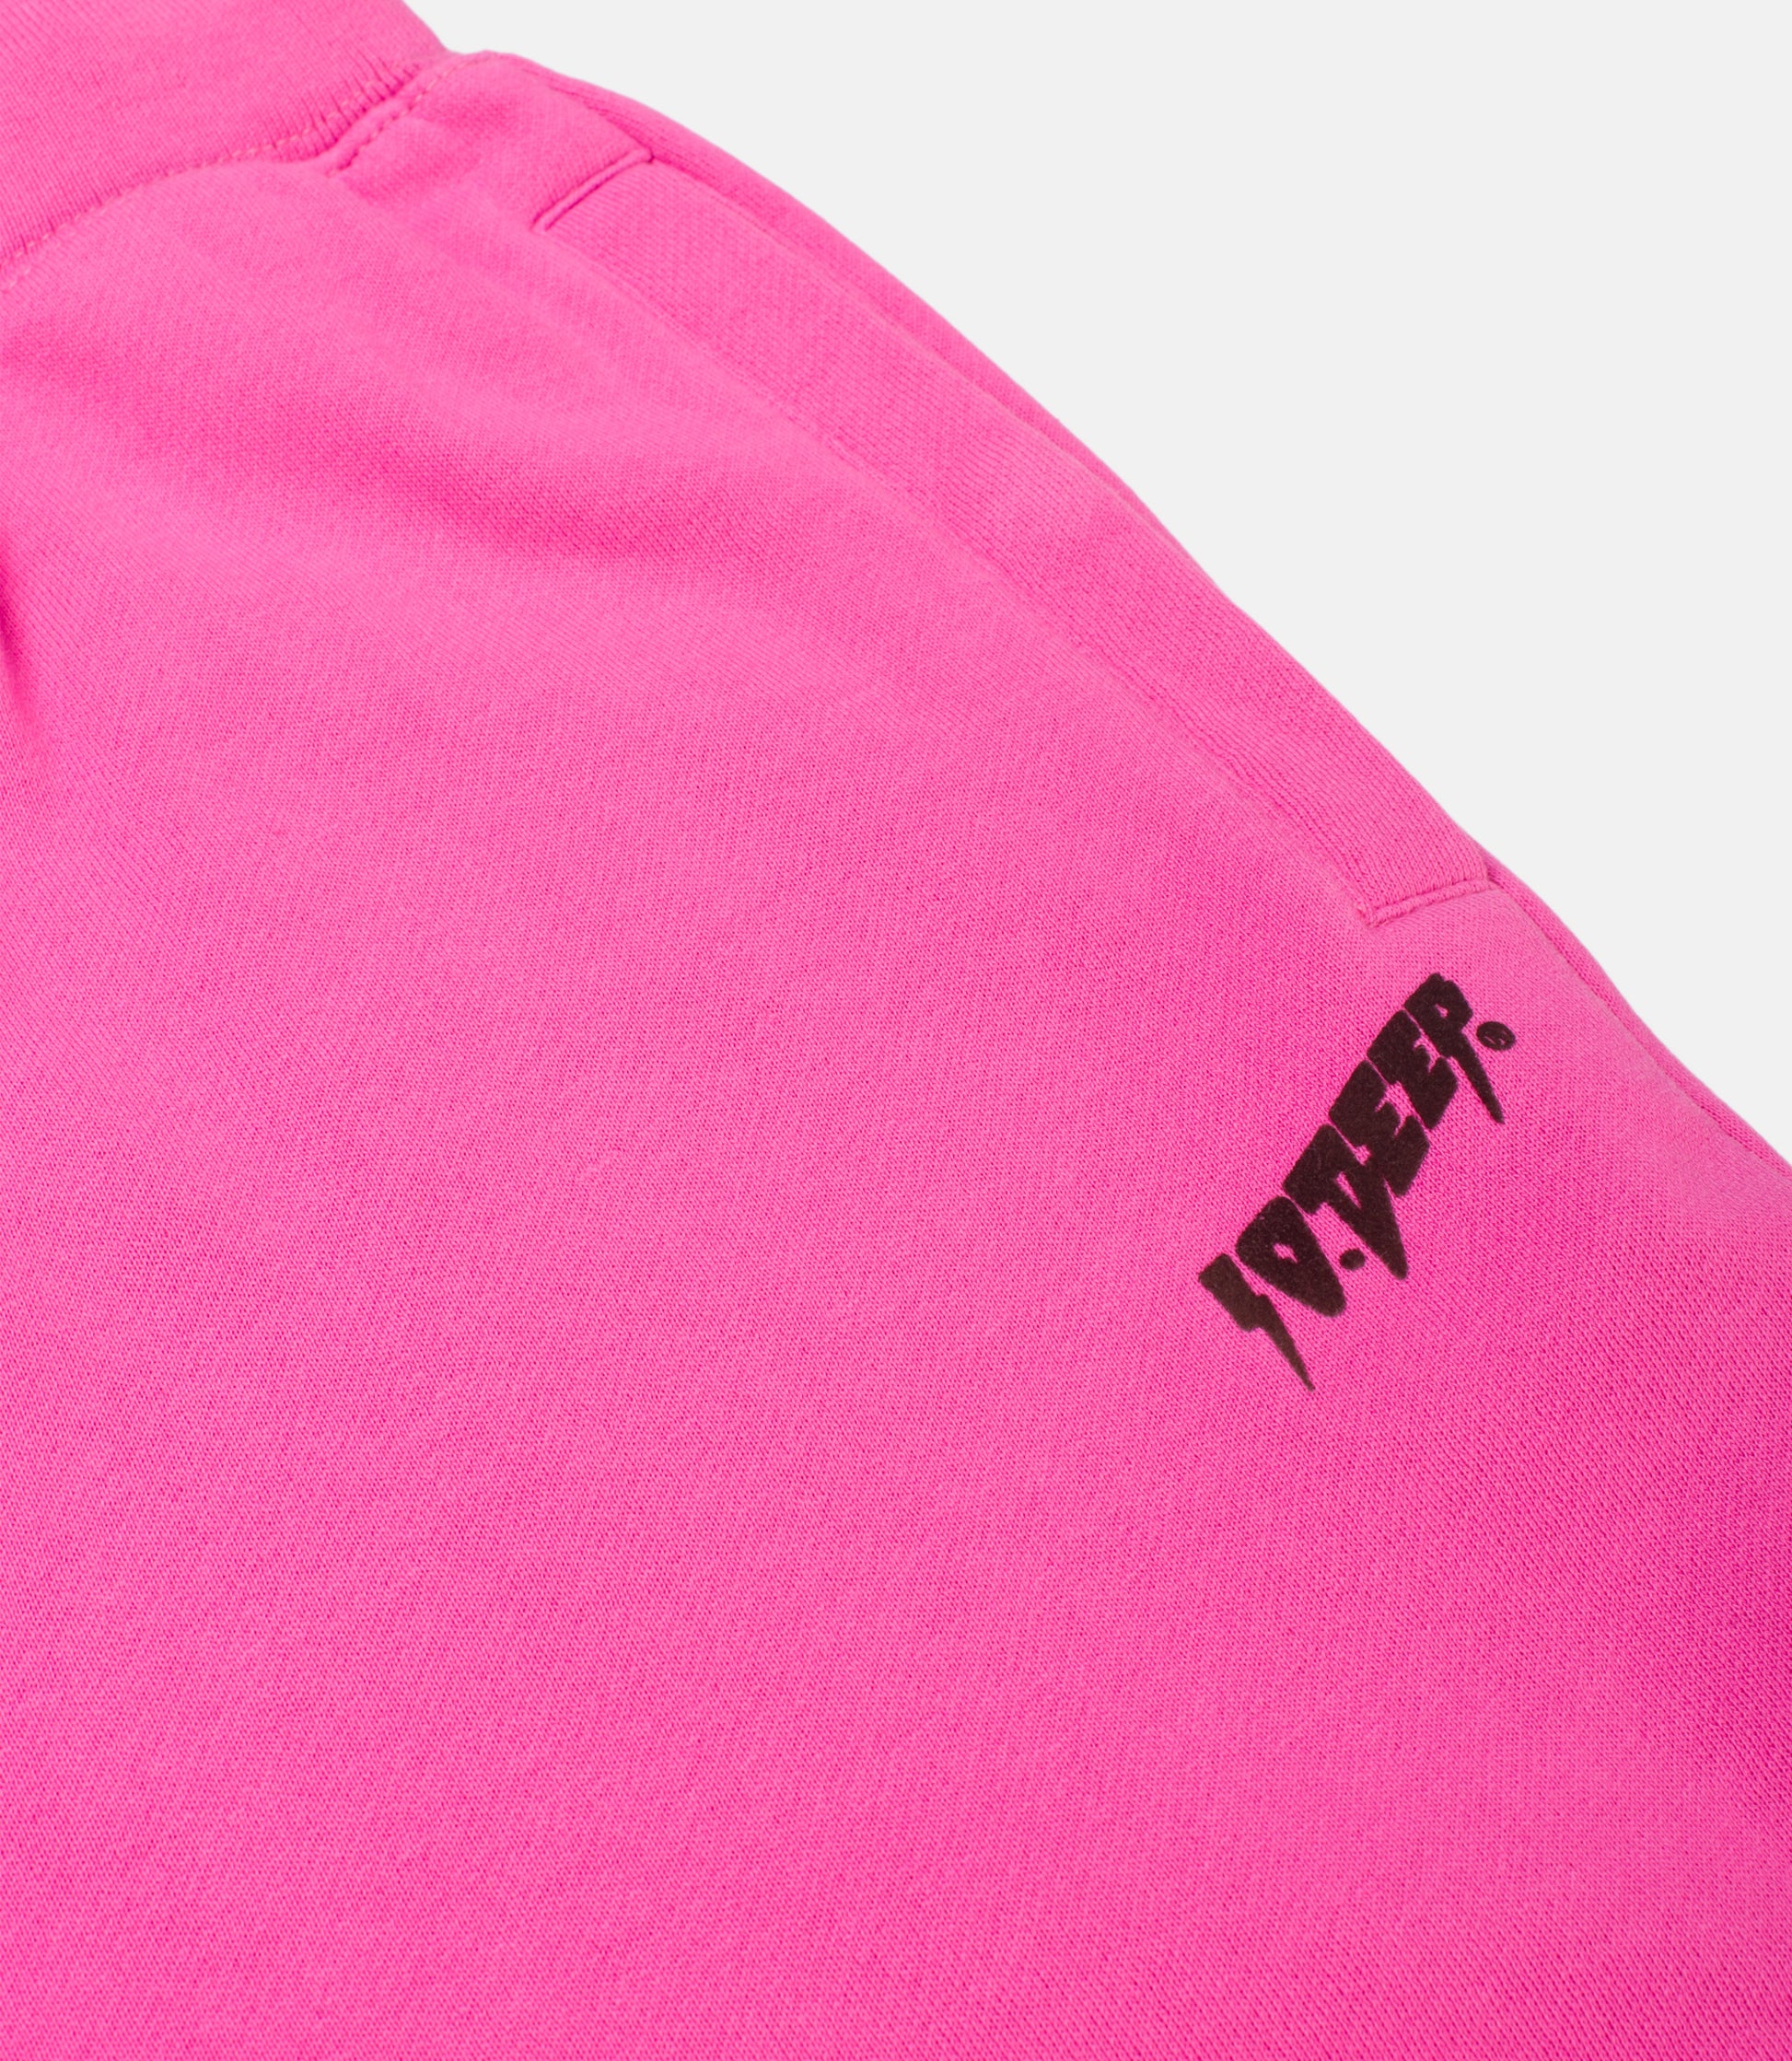 10Deep - Sound & Fury Men's Sweatpants, Pink - The Giant Peach